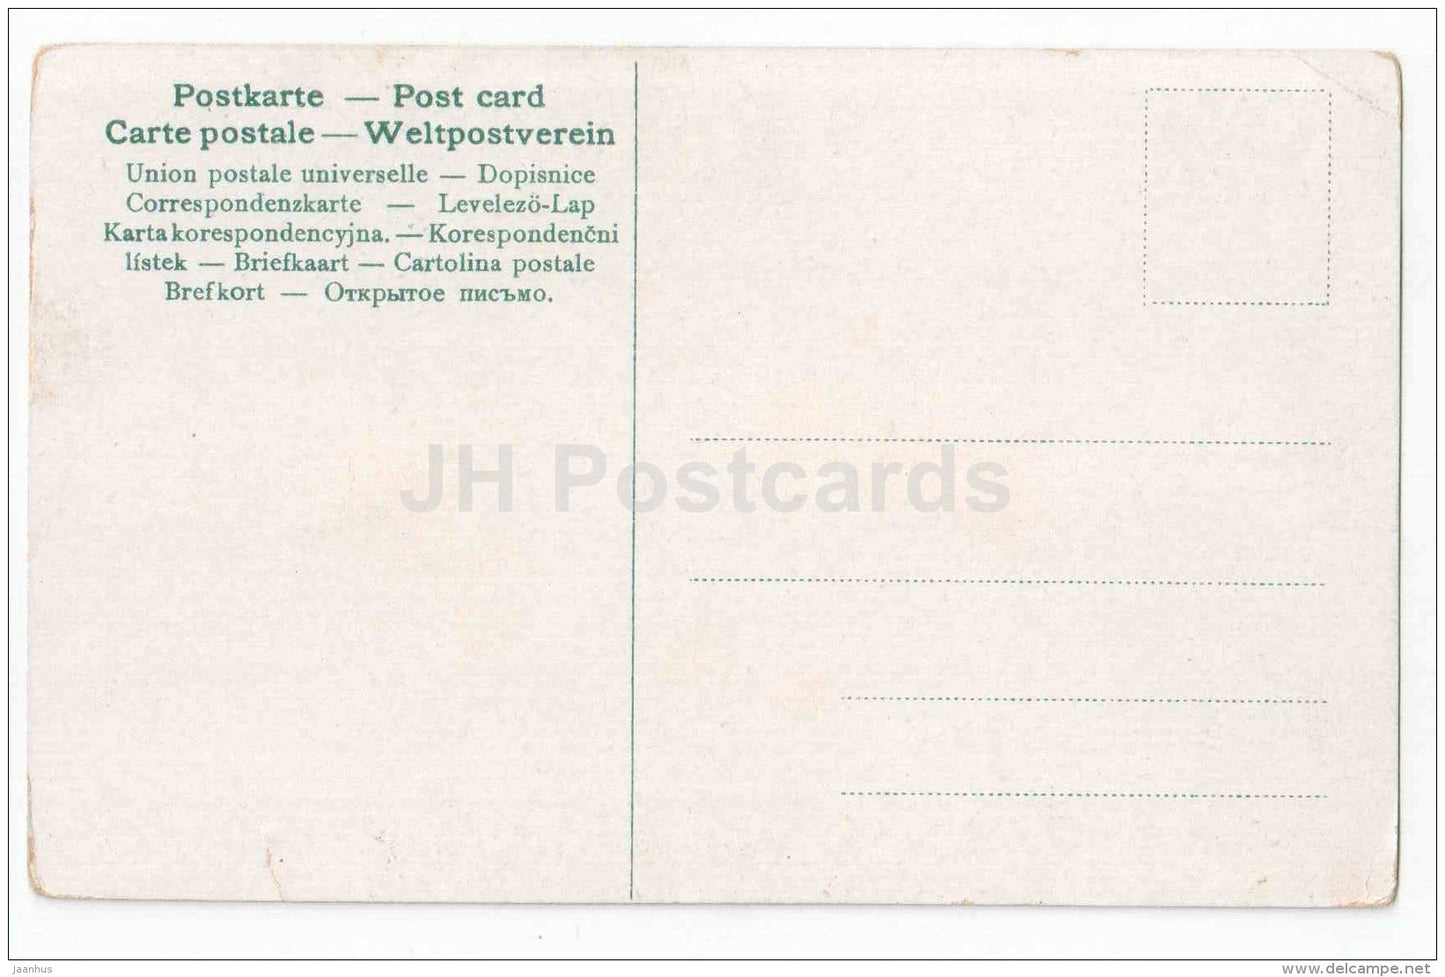 Du bist mein Trost in bangen Stunden - couple - man and woman - 495 III - old postcard - Germany - unused - JH Postcards